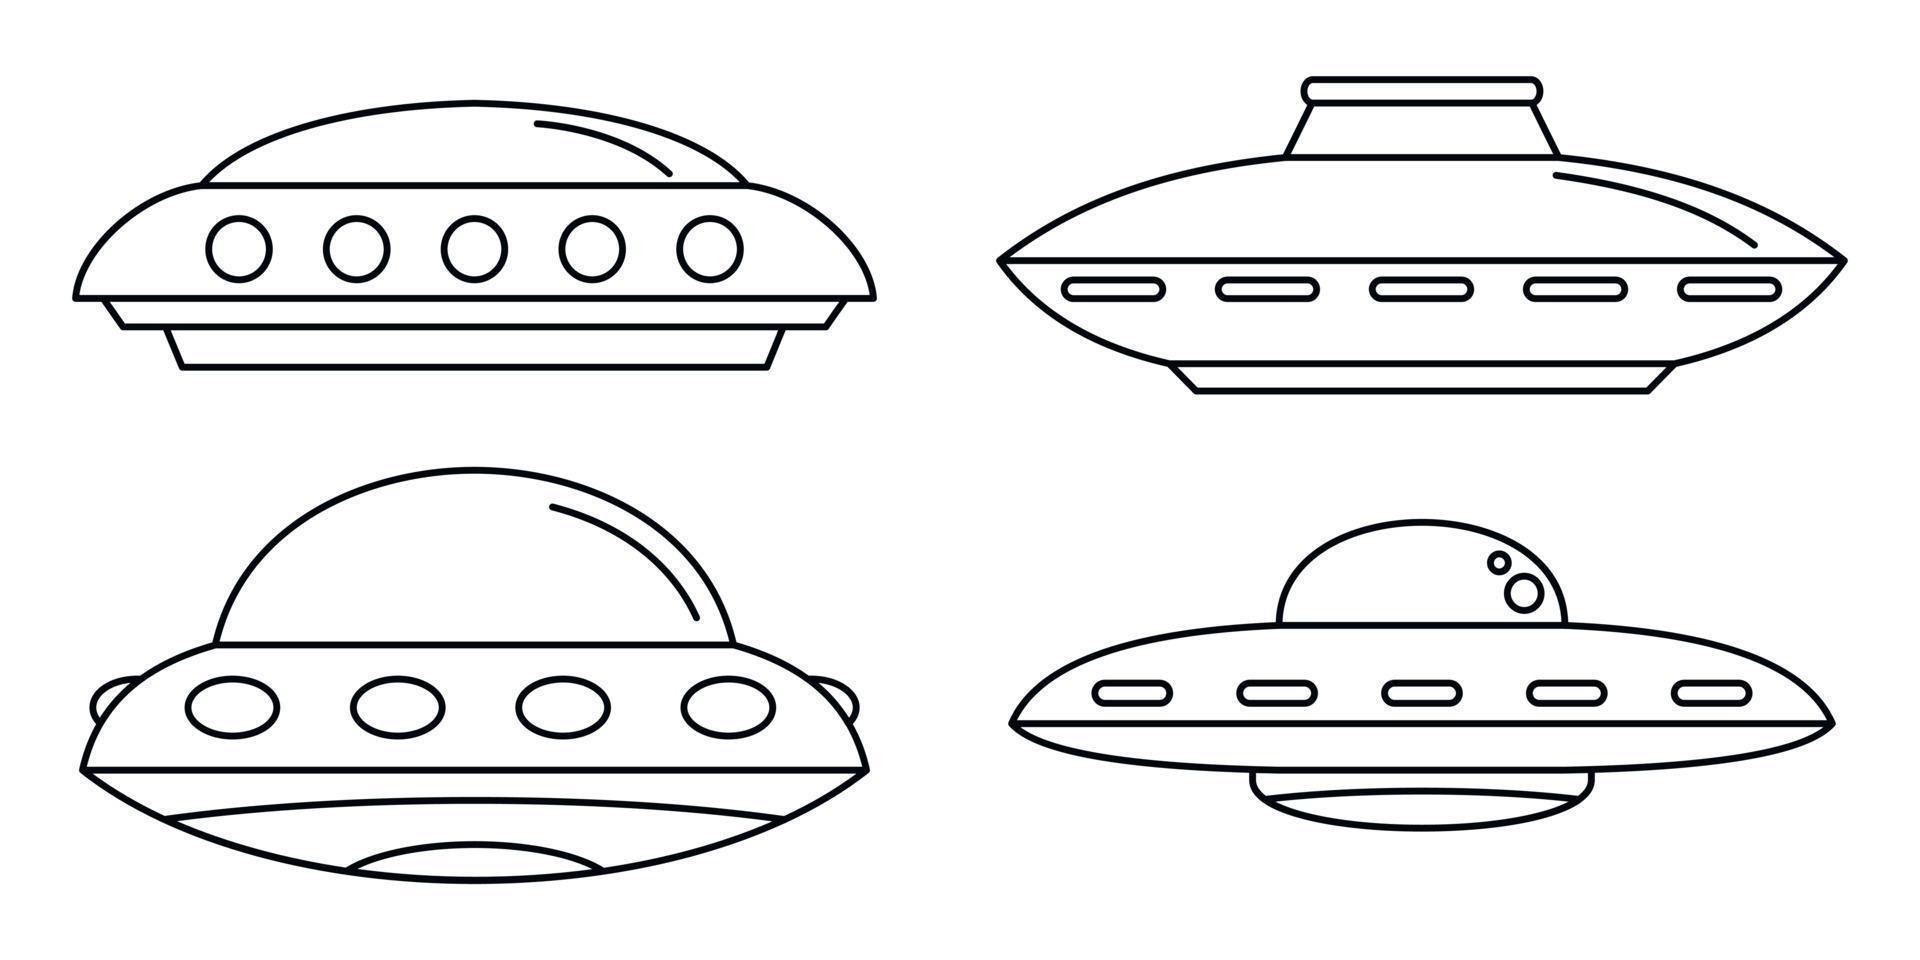 UFO spaceship icon set, outline style vector